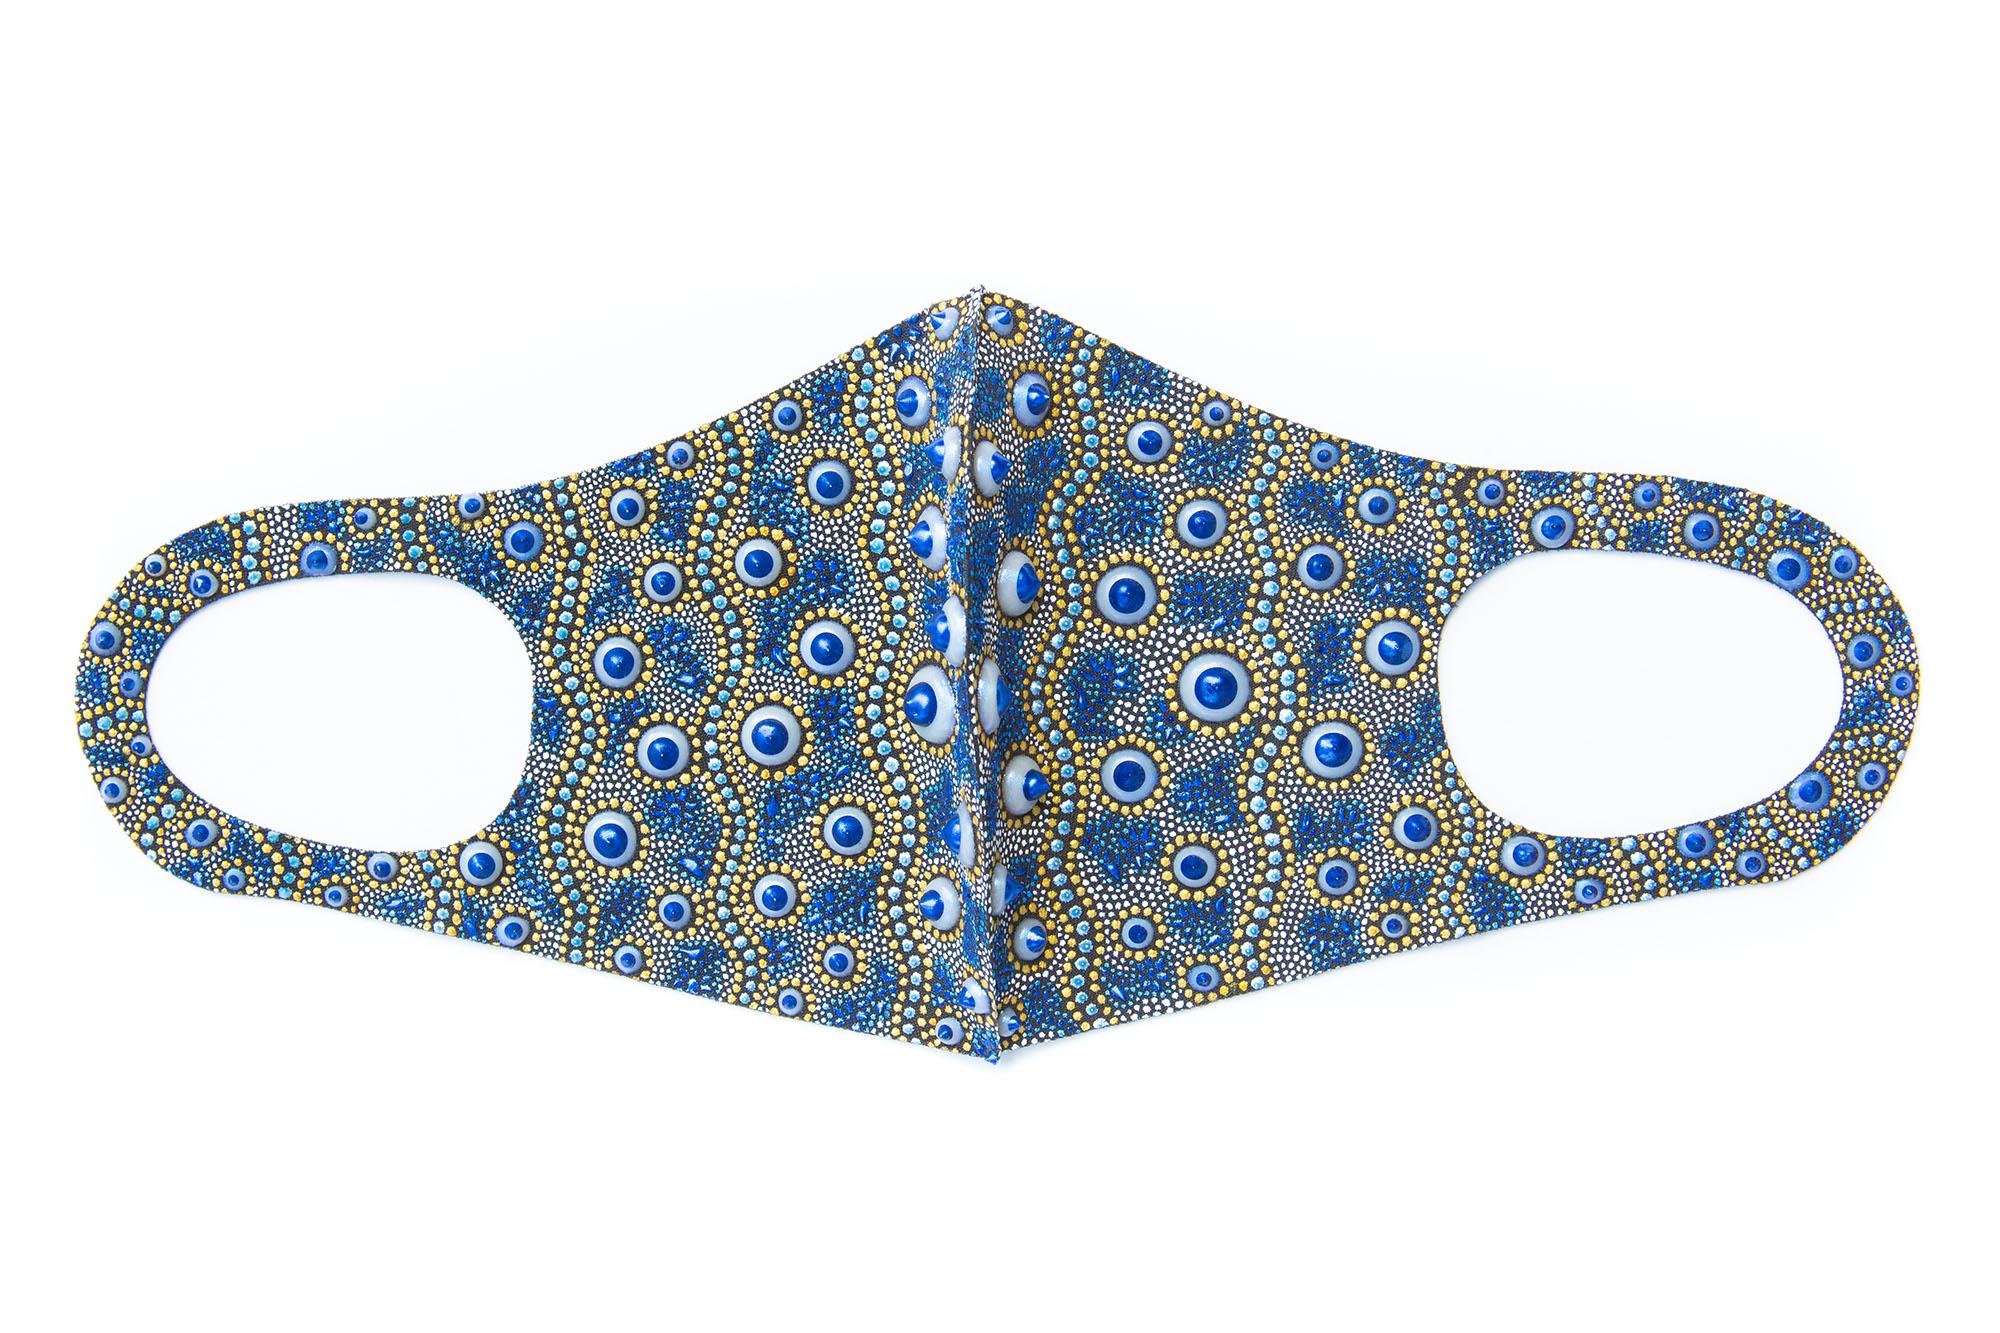 Royal Blue Porcelain Urchin Neoprene Face Mask - Mixed Media Art by PJ Linden